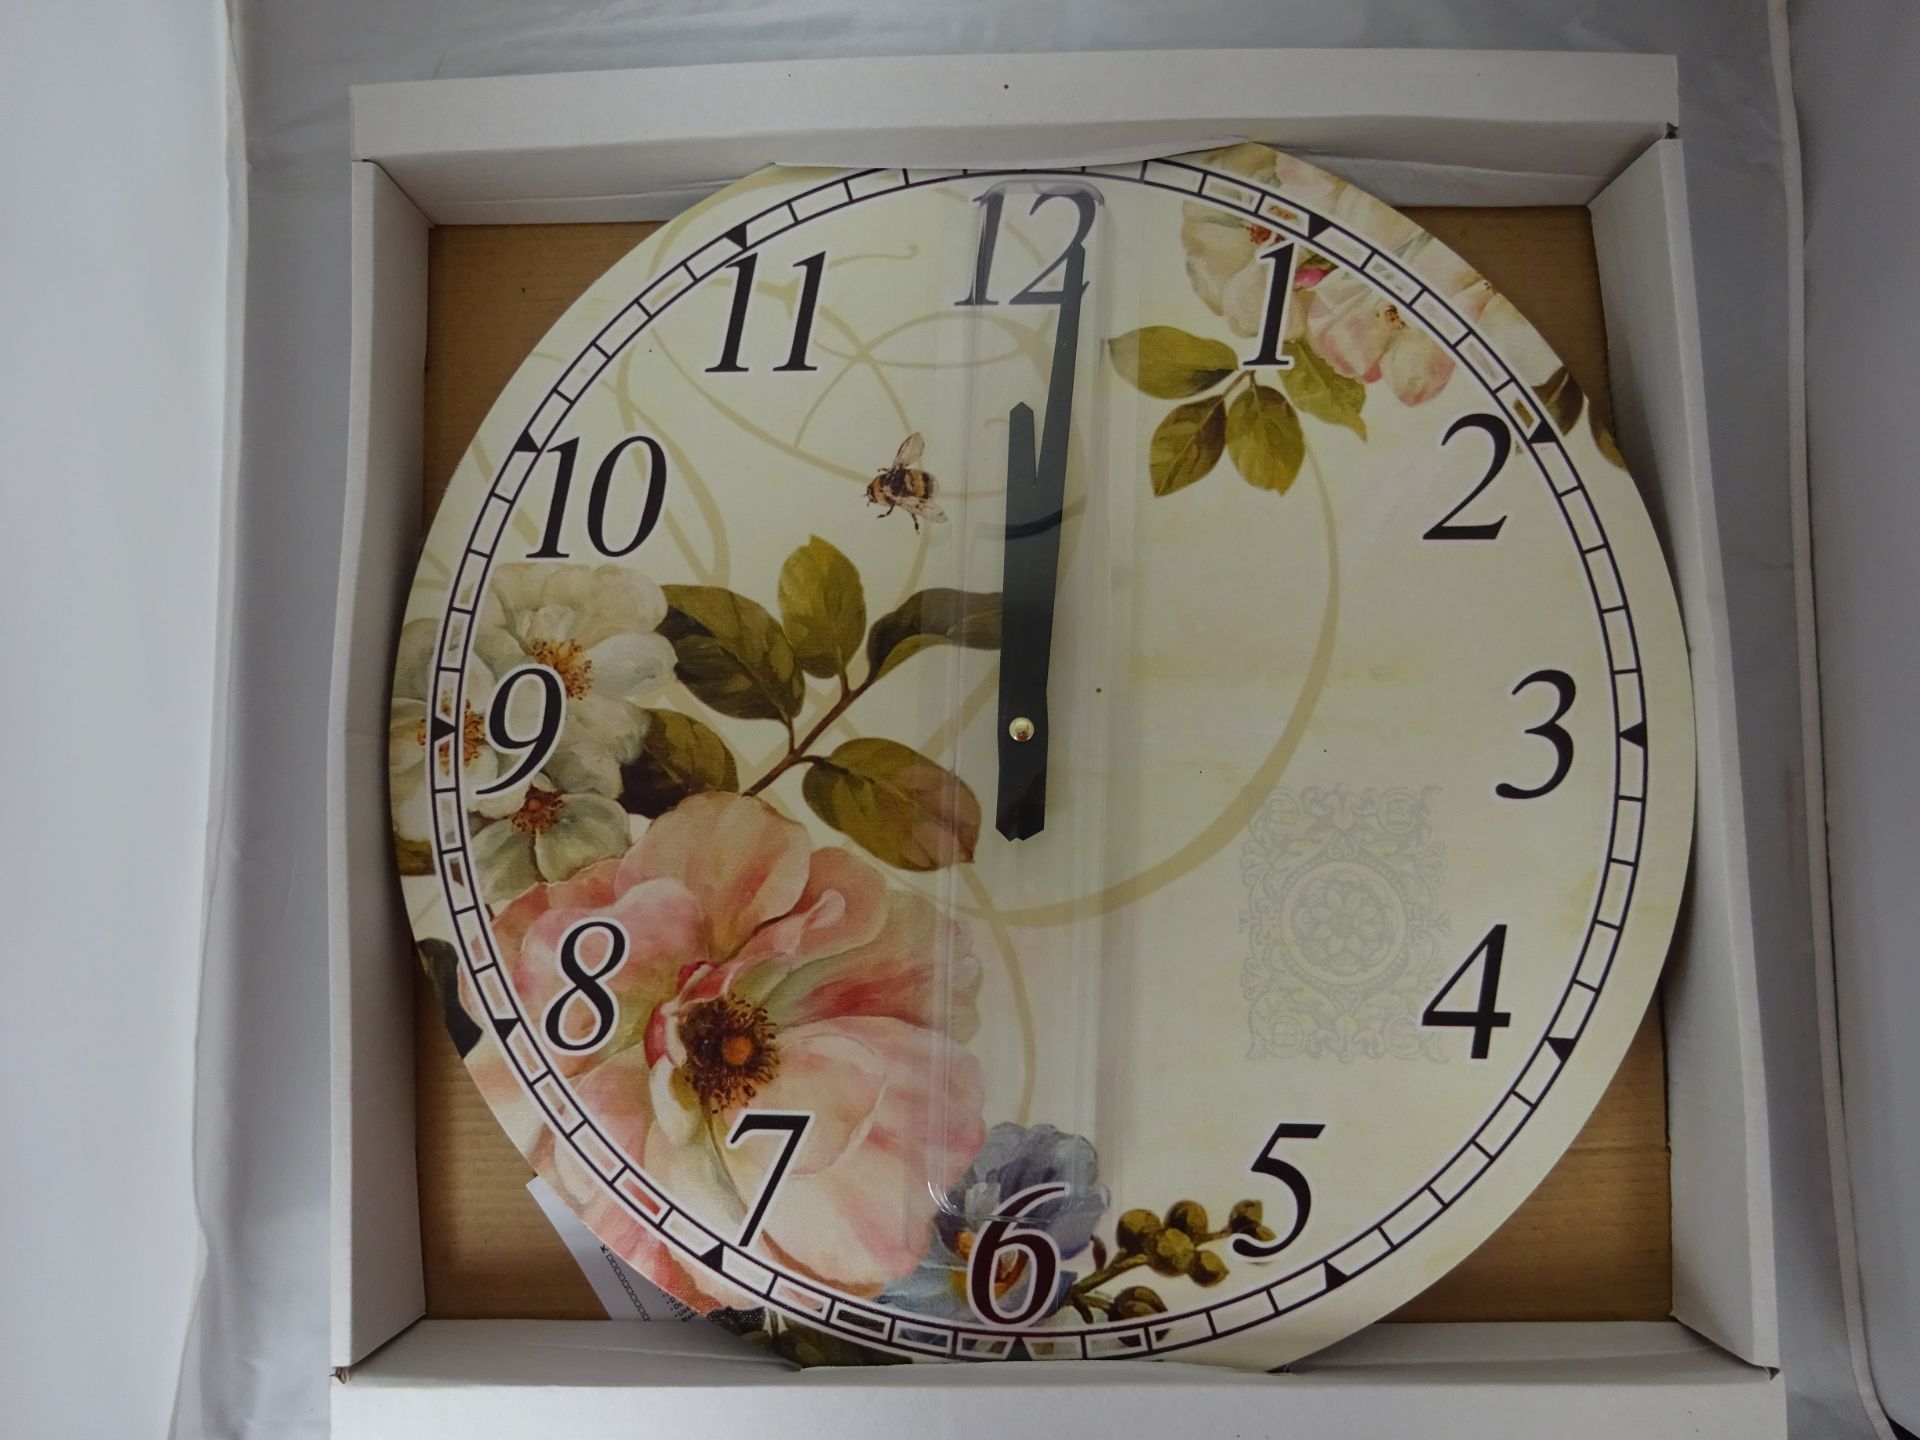 New Floral Wall Clock in Original Packaging